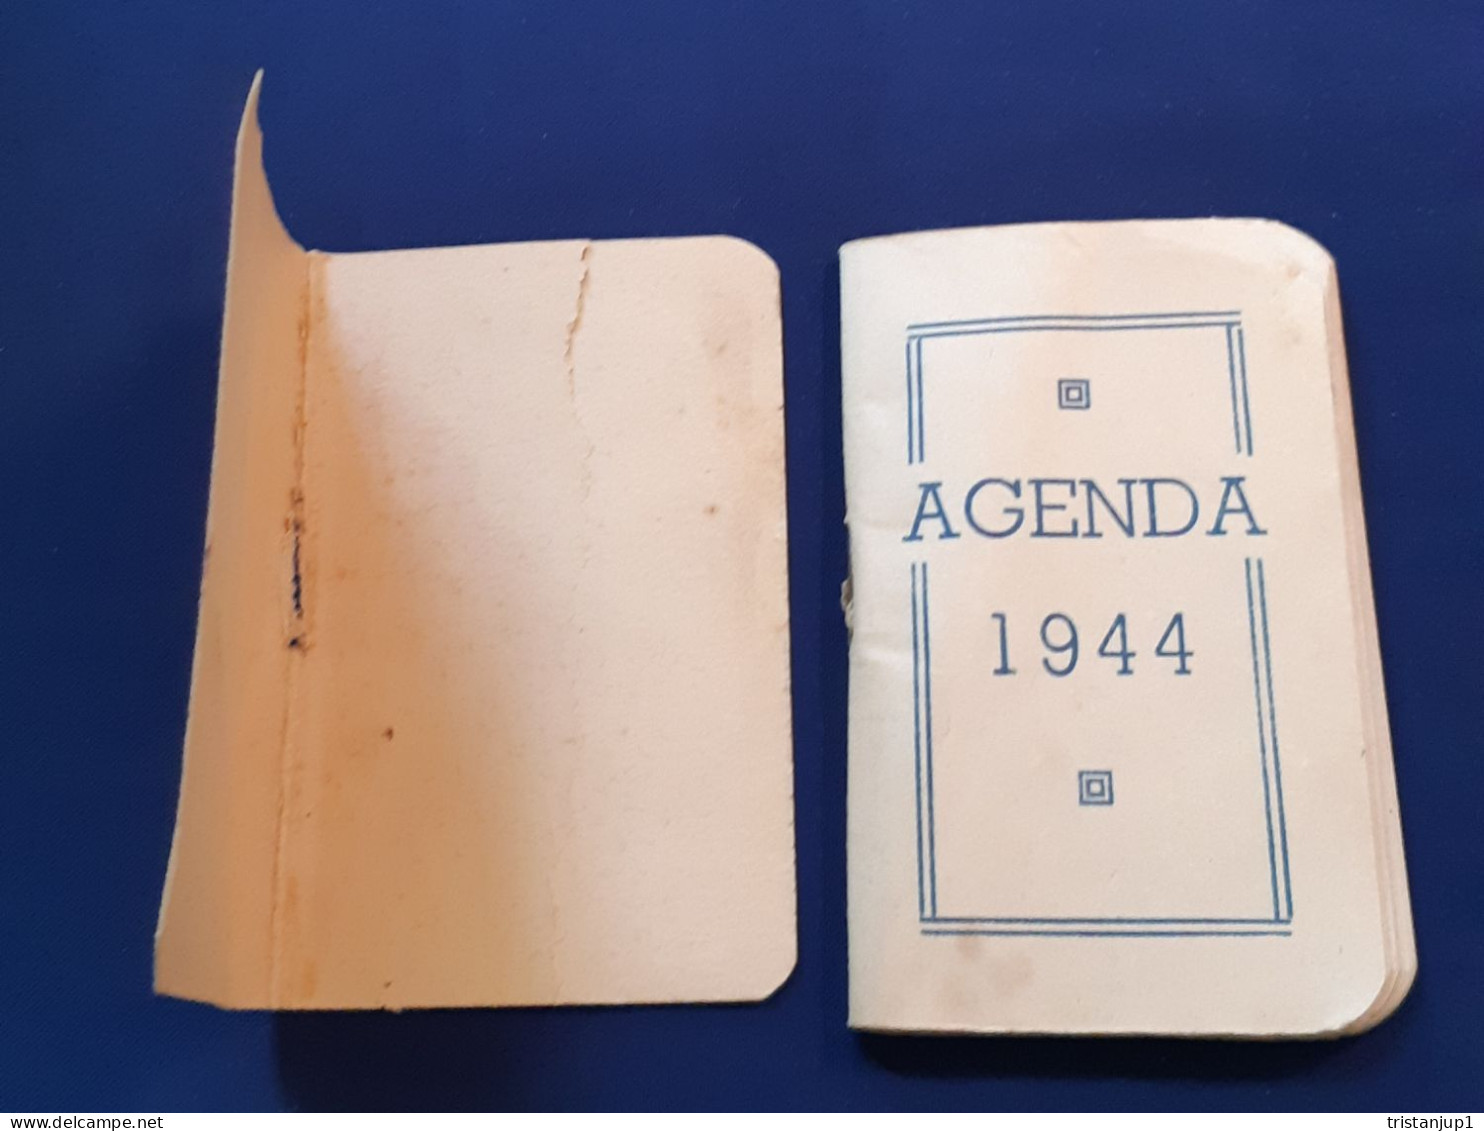 Mini agenda de 1944